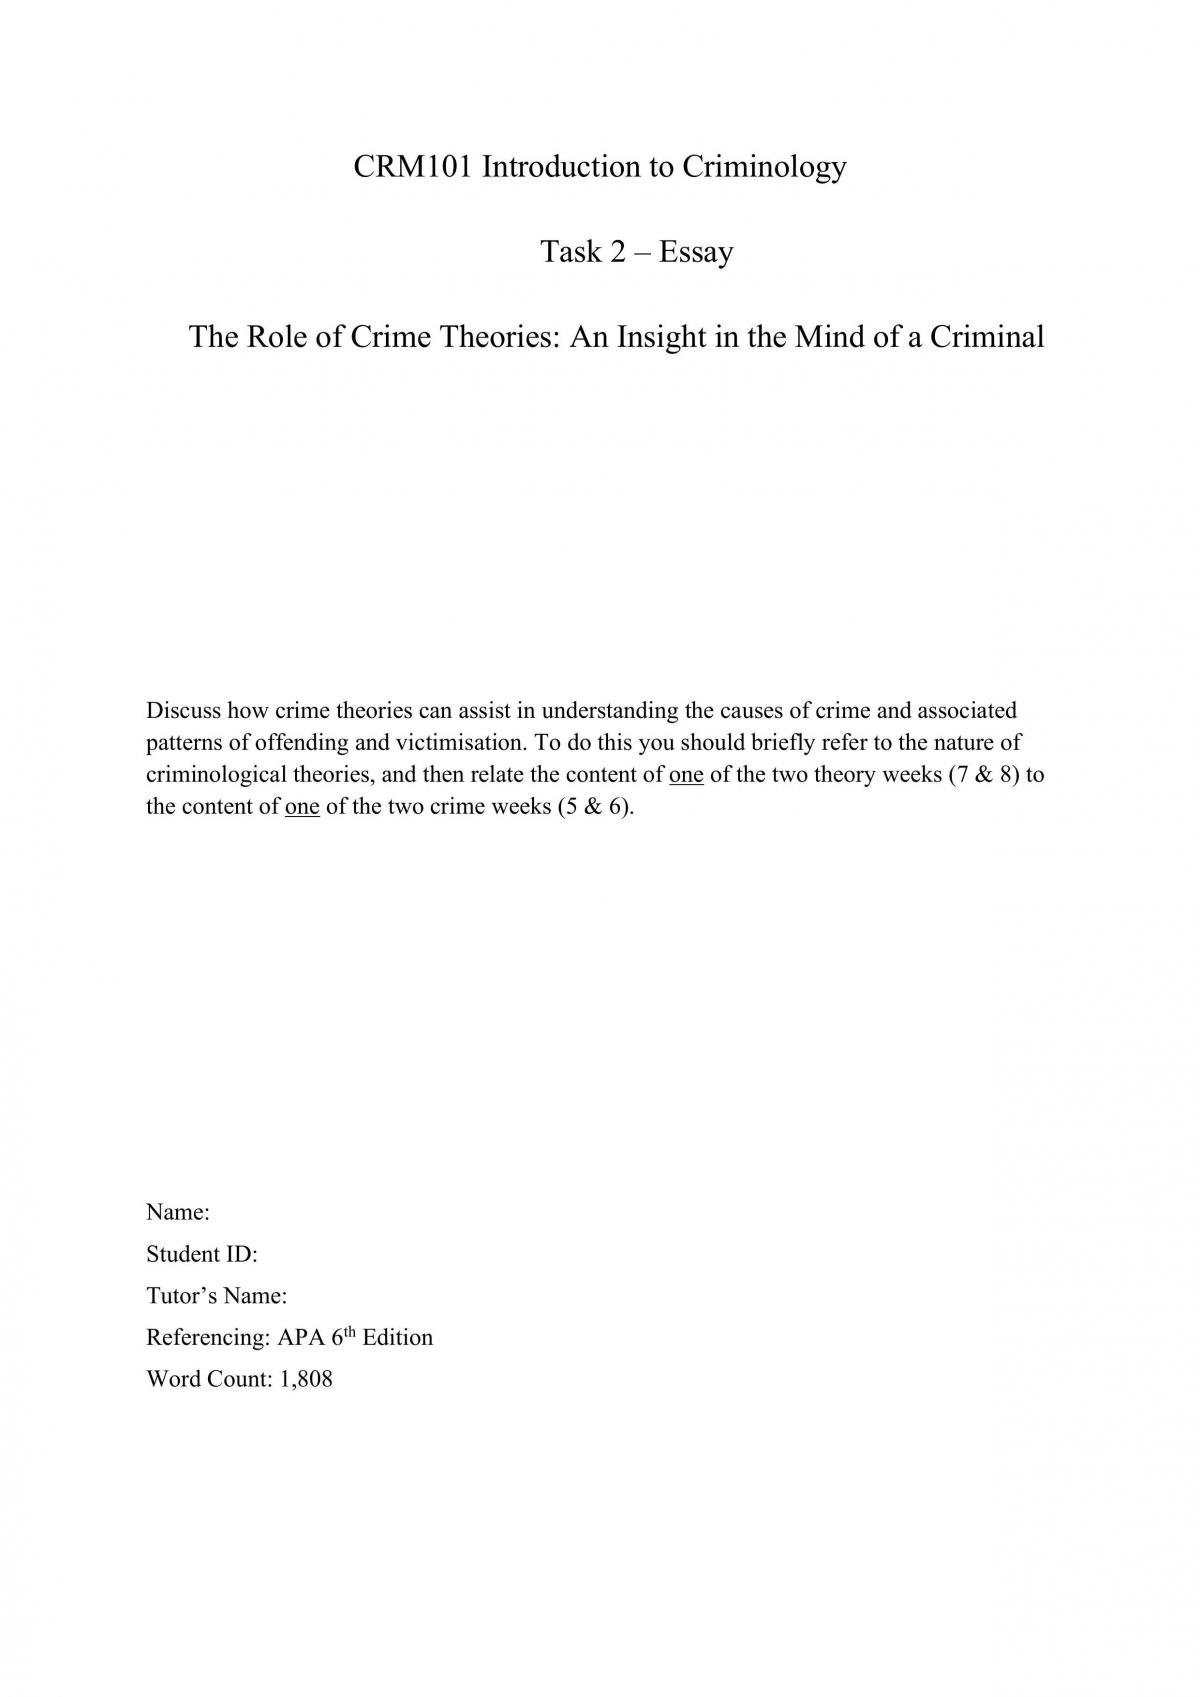 essay titles about criminology